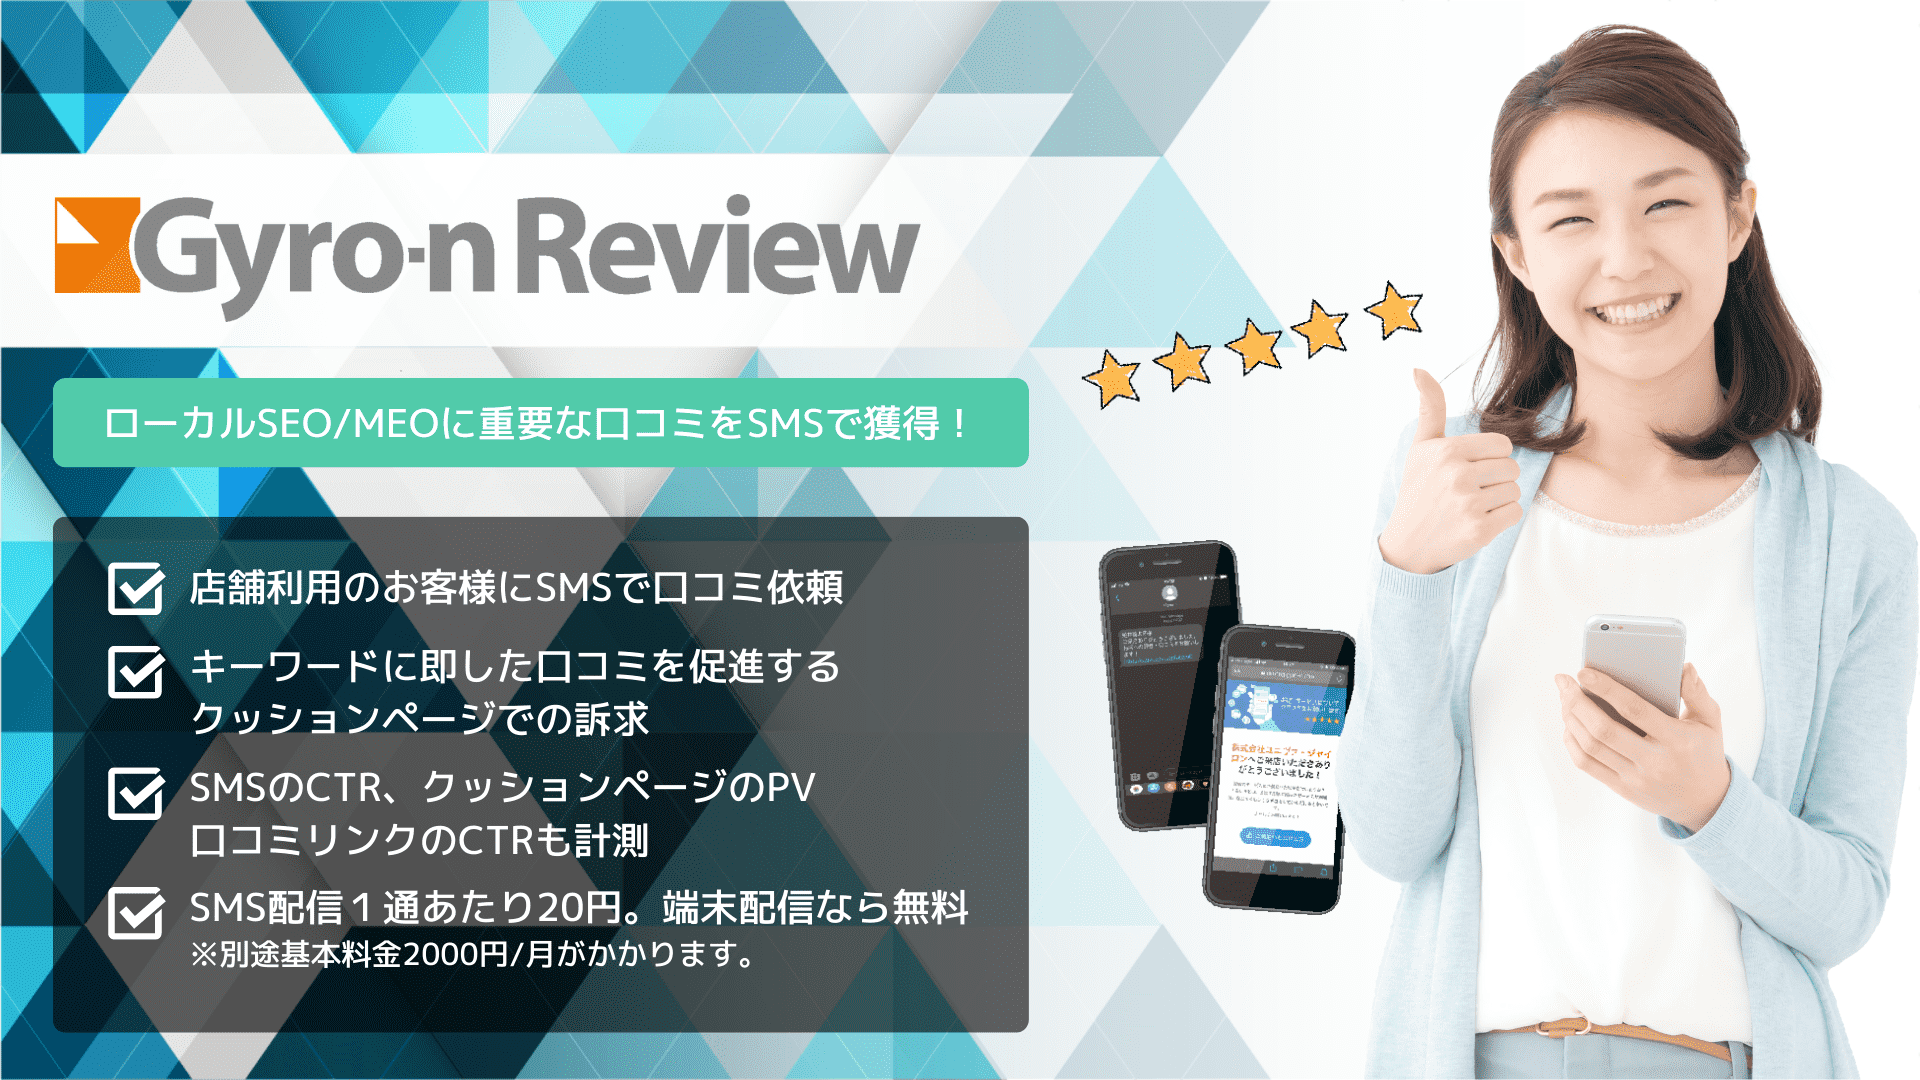 Gyro-n Review」サービス資料